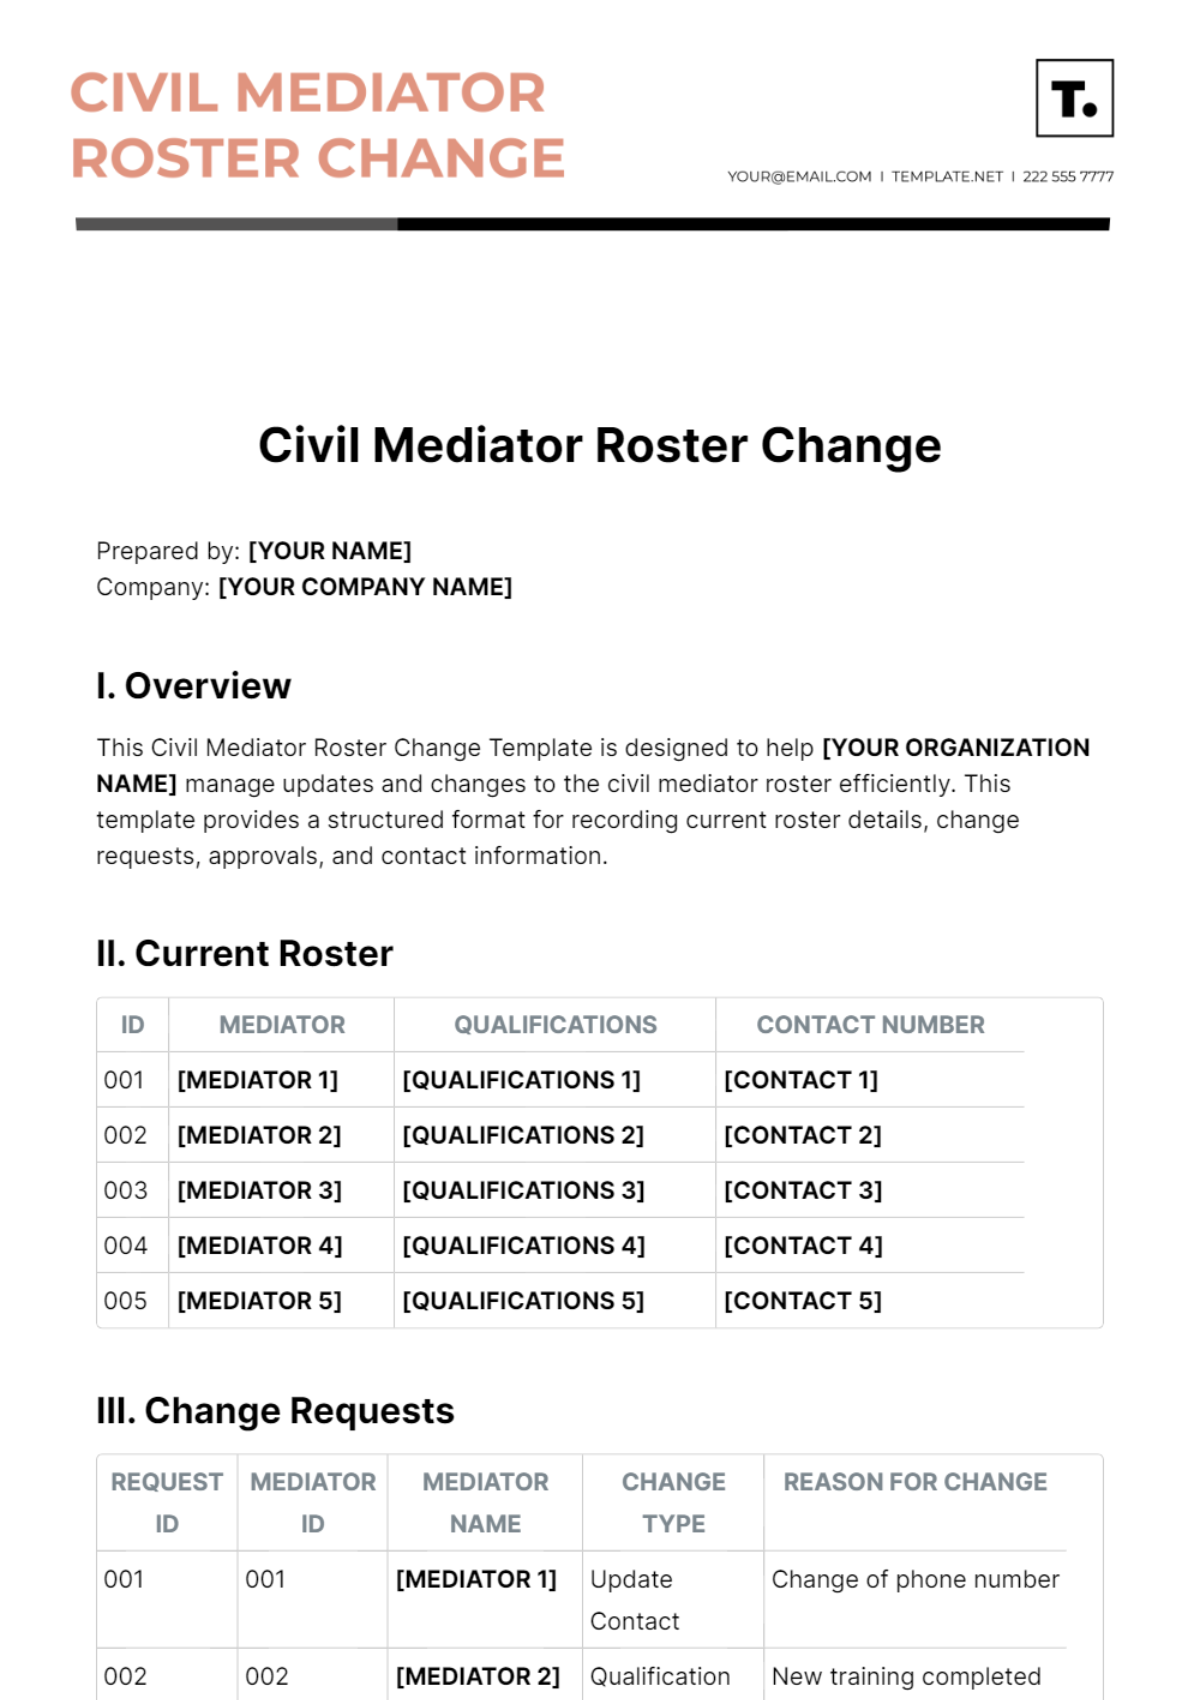 Civil Mediator Roster Change Template